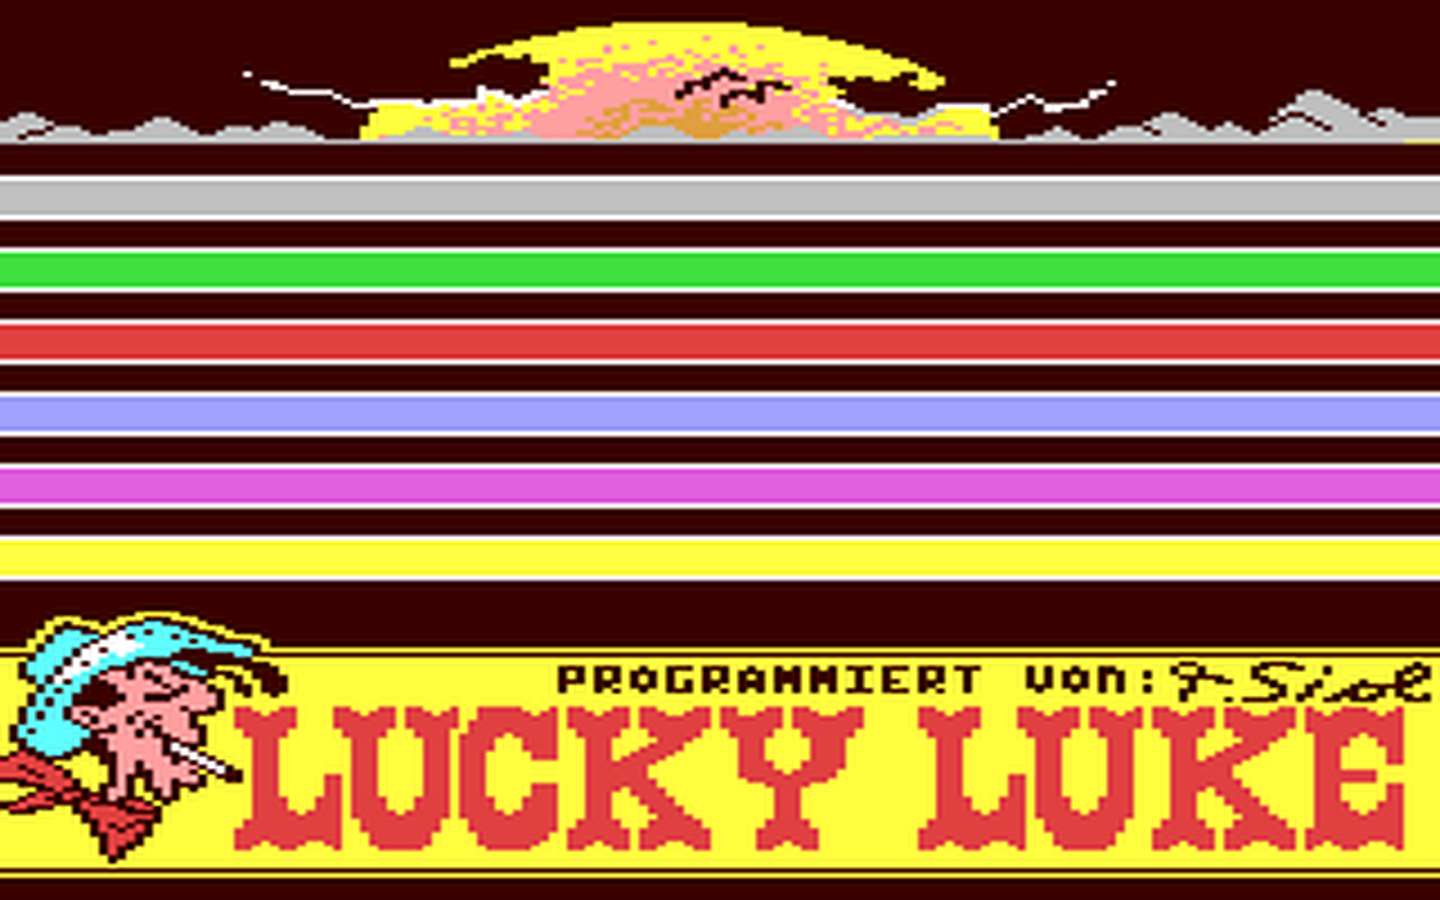 C64 GameBase Gamblin'_Cowboy_-_Lucky_Luke (Not_Published)